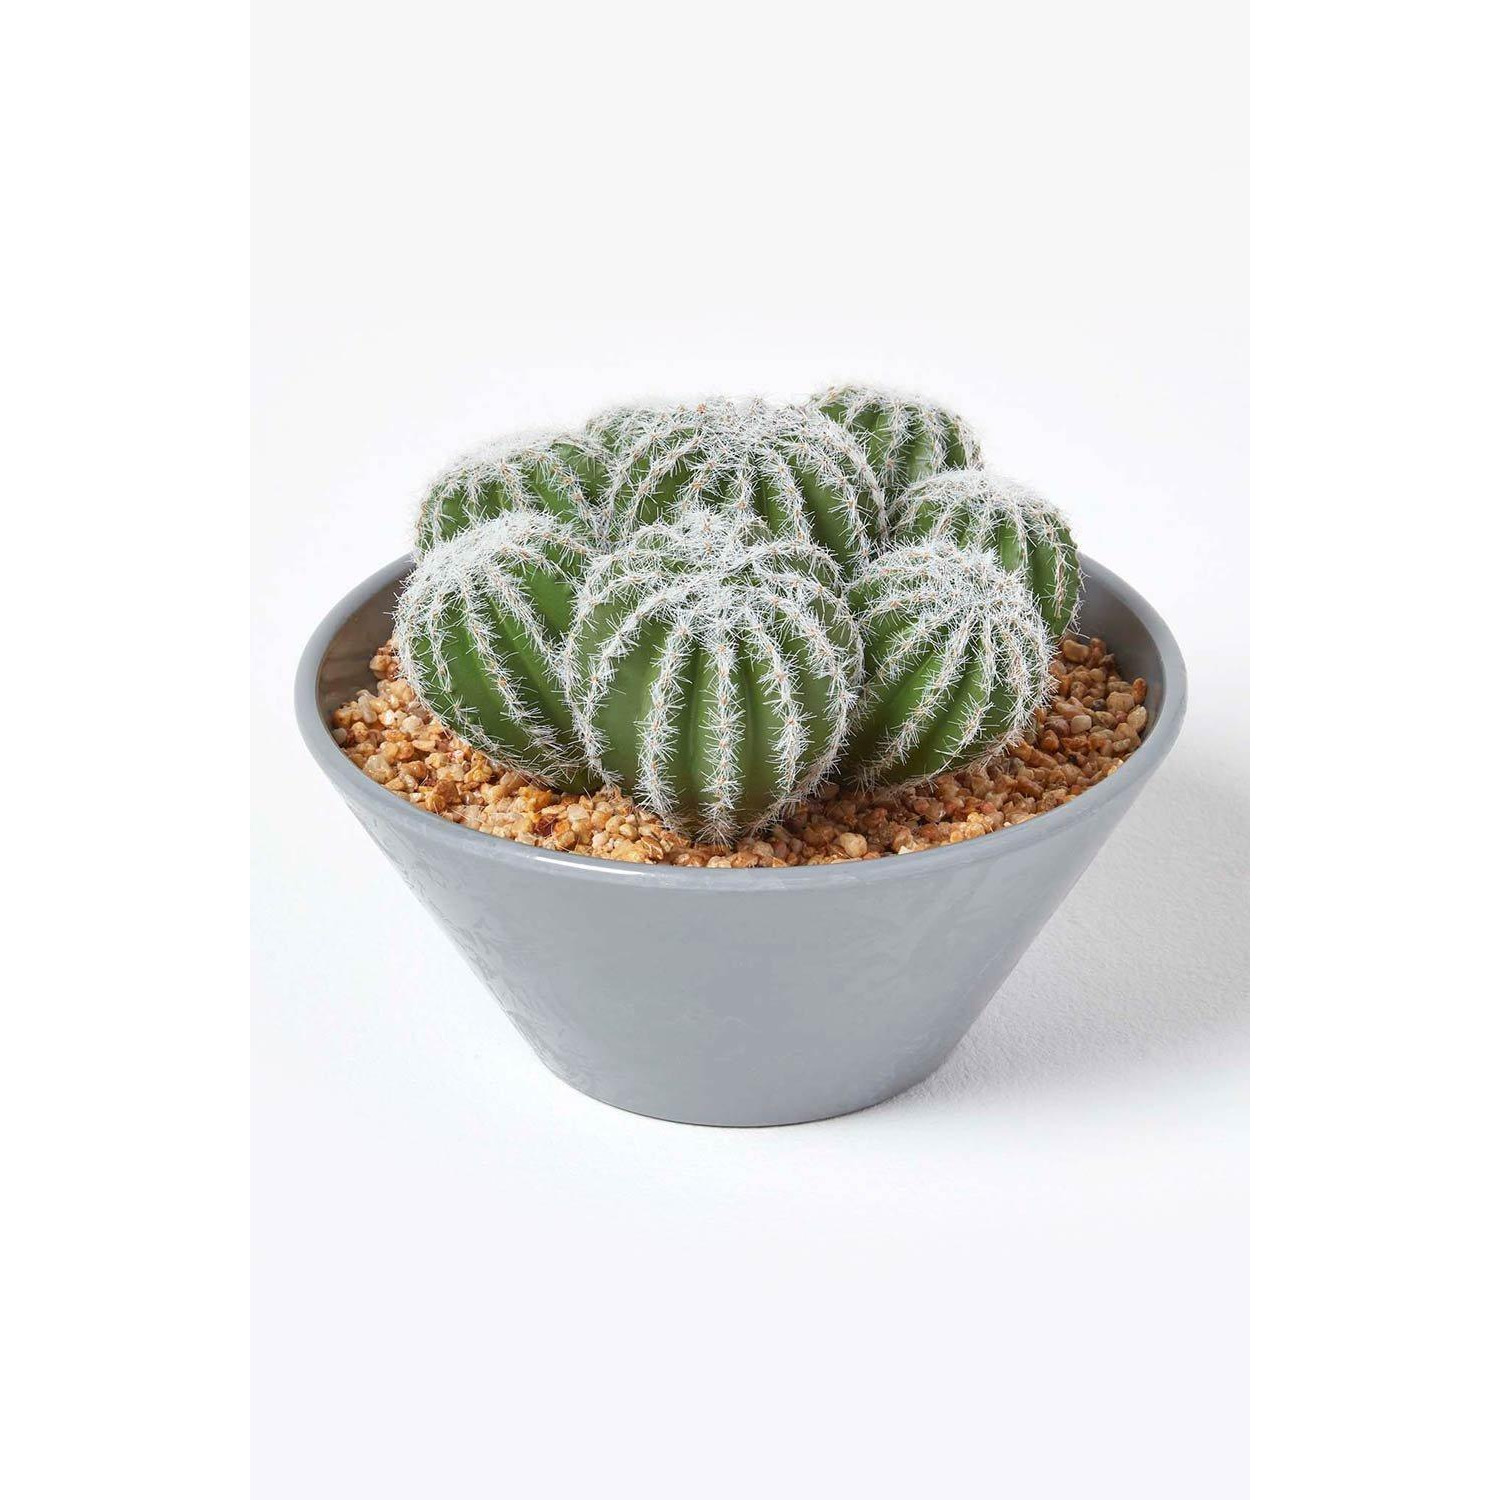 Artificial Barrel Cactus Arrangement in Round Grey Pot, 17 cm Tall - image 1